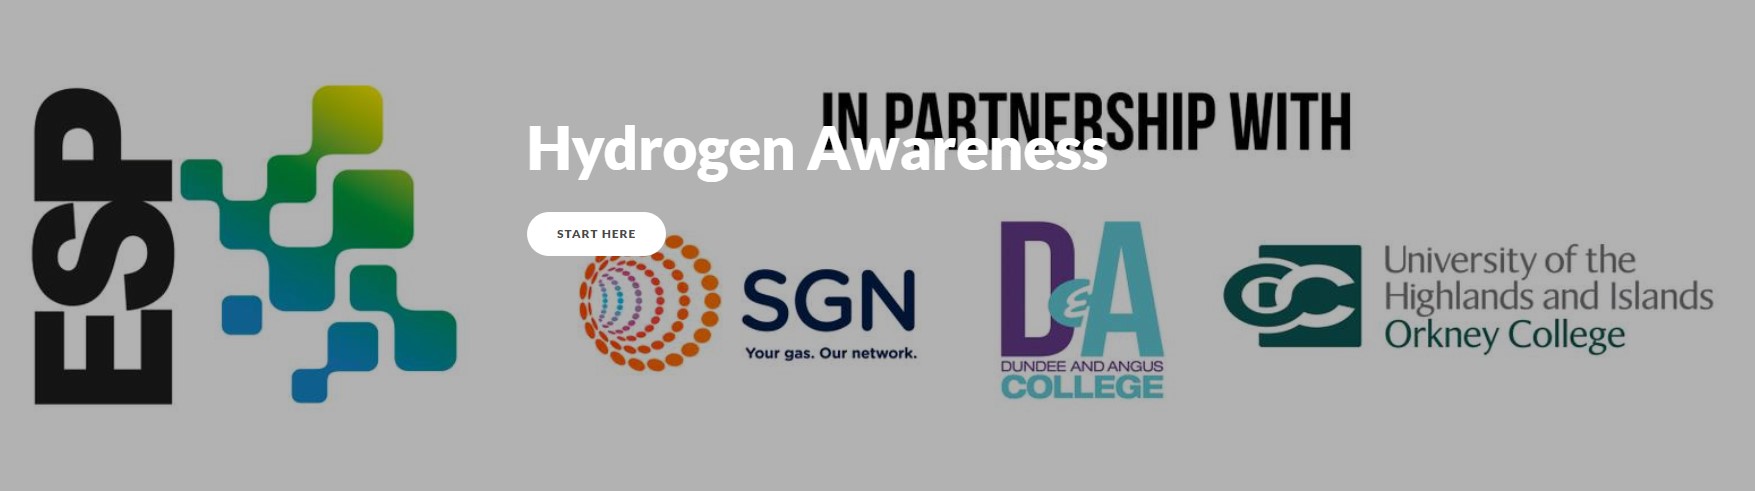 Hydrogen awareness course banner link